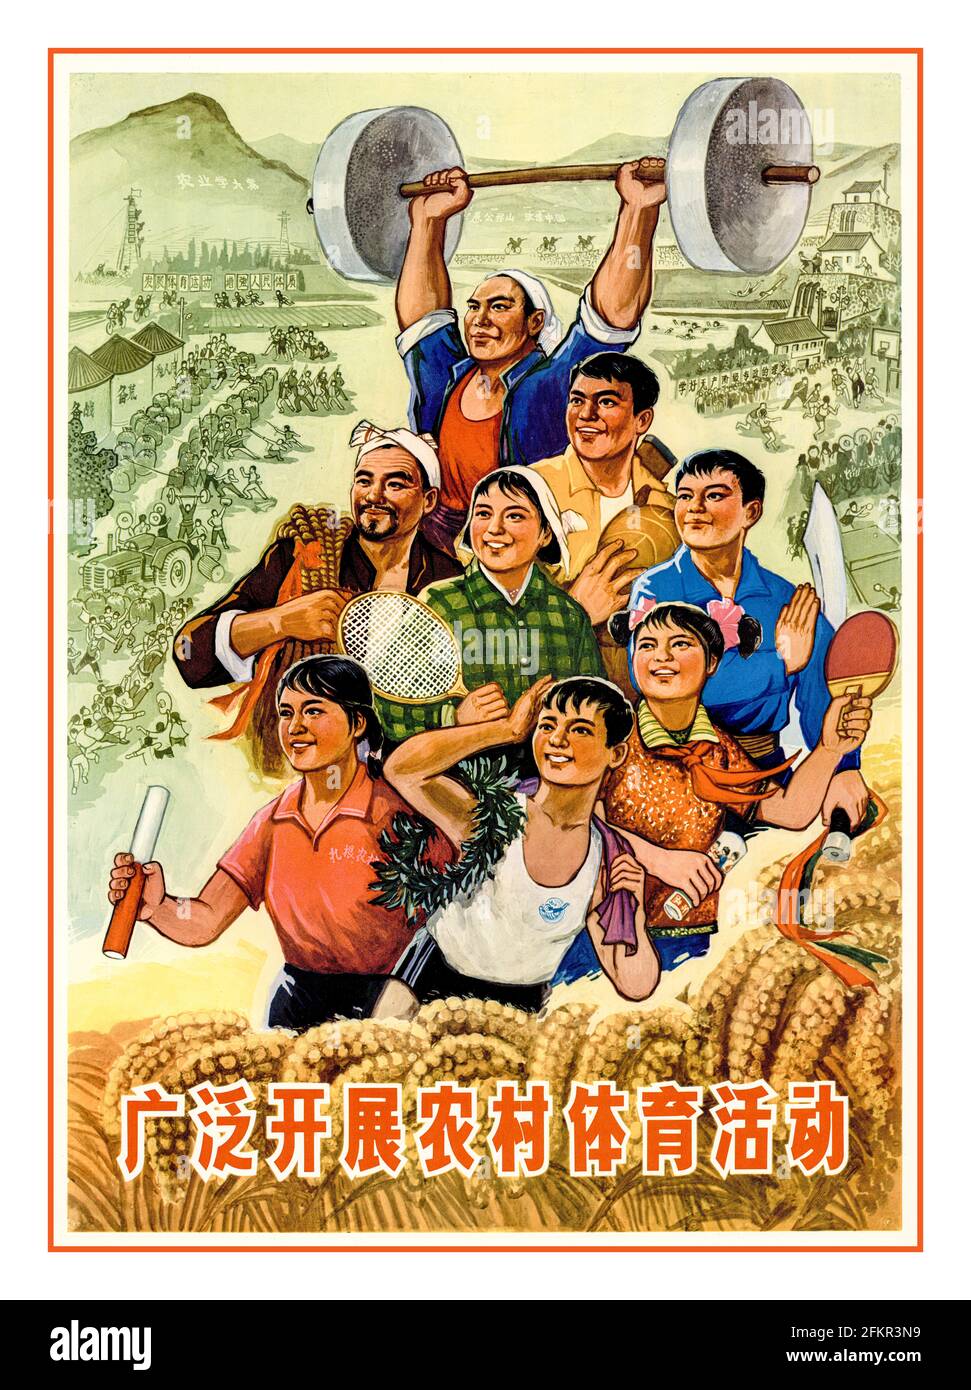 Vintage Chinese Propaganda Poster 1970's 'Let US spread and developed Sport nelle aree rurali 'Zhao Kunhan Poster 1975 sotto la presidenza Del Partito comunista cinese – Mao Zedong Foto Stock